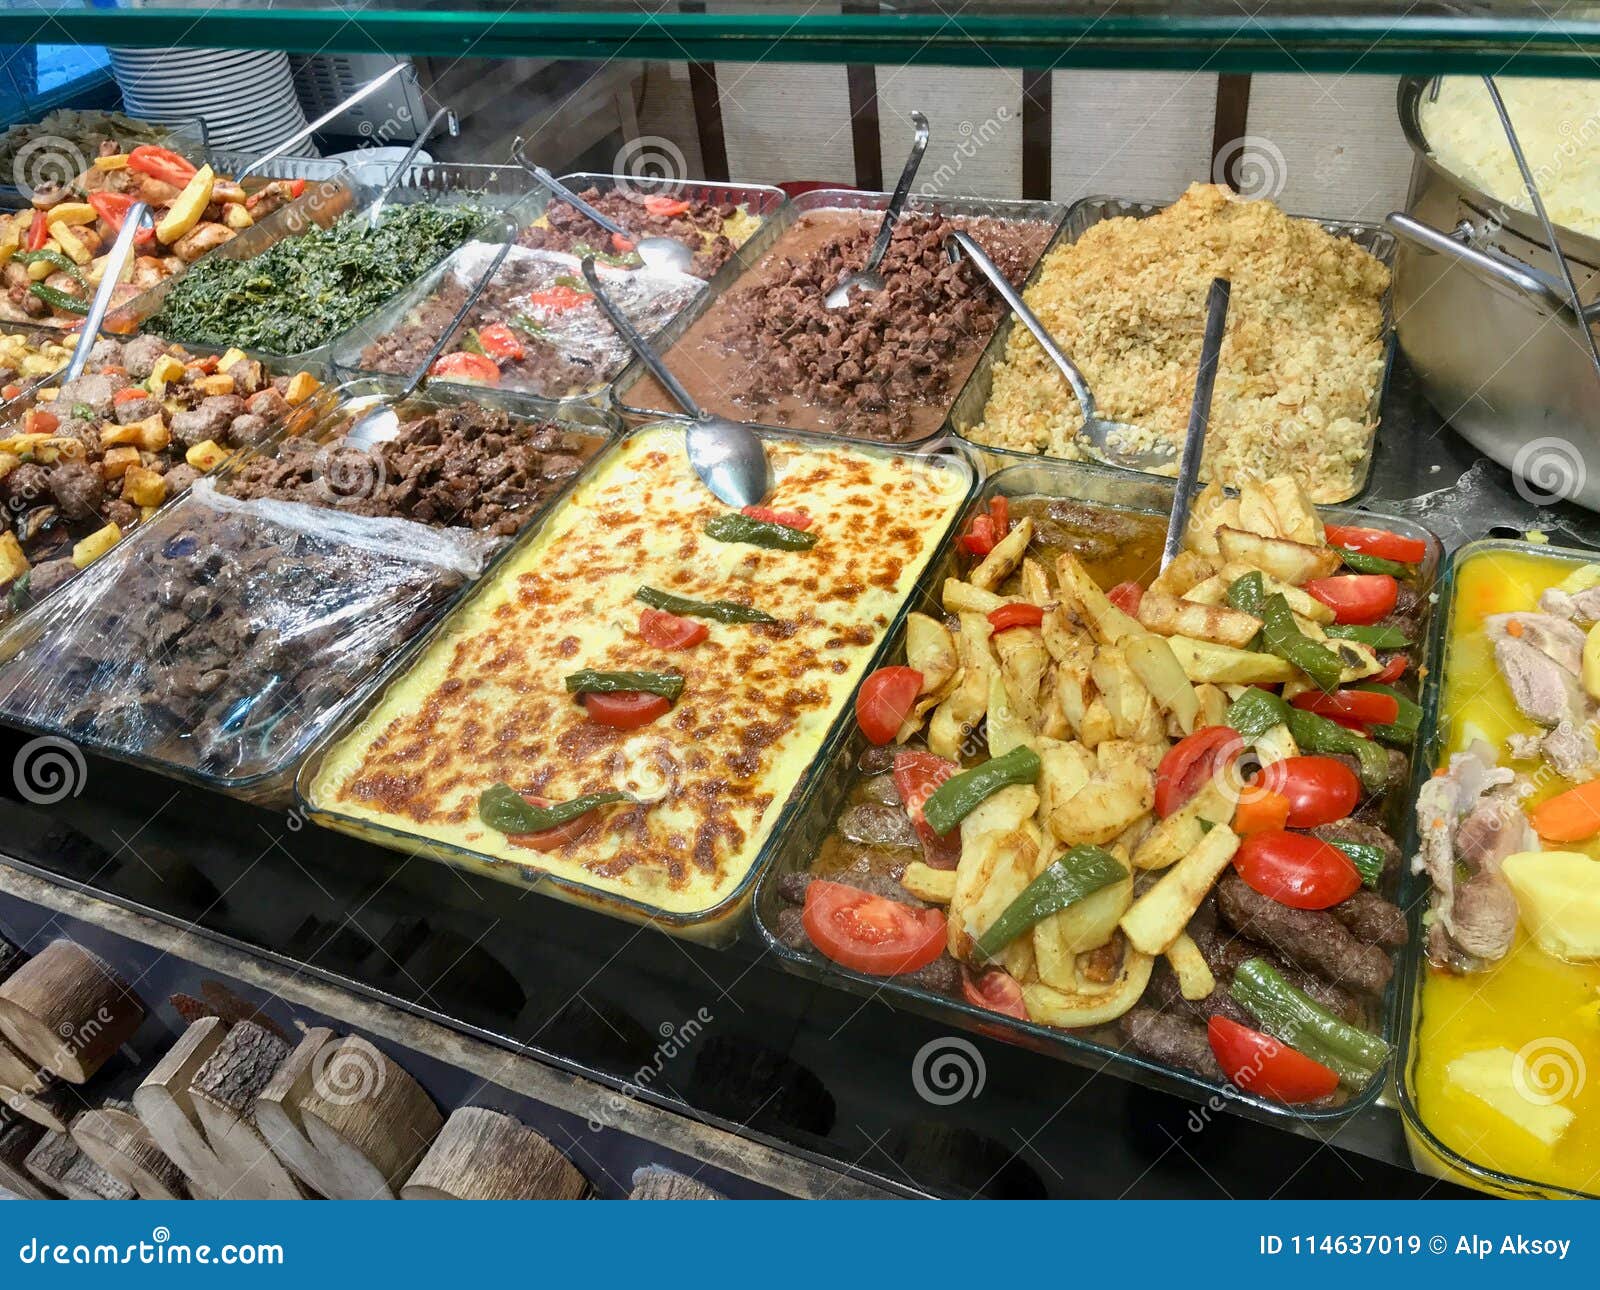 traditional turkish / karadeniz homemade foods served in big trays at restaurant for sale.